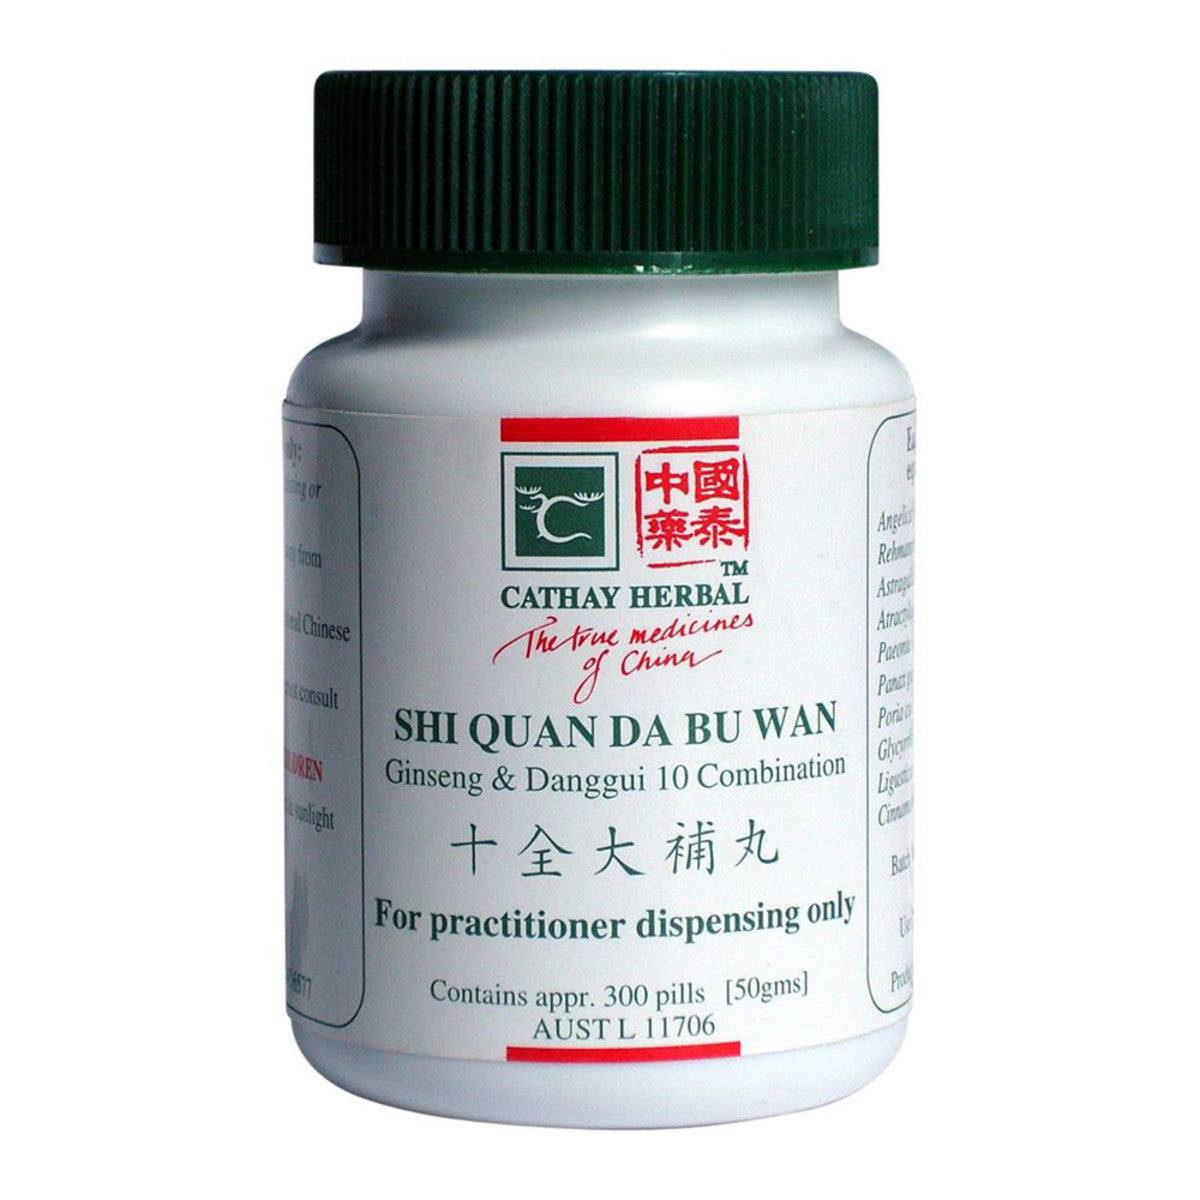 Cathay Herbal - Ginseng and Danggui Ten Combination pill